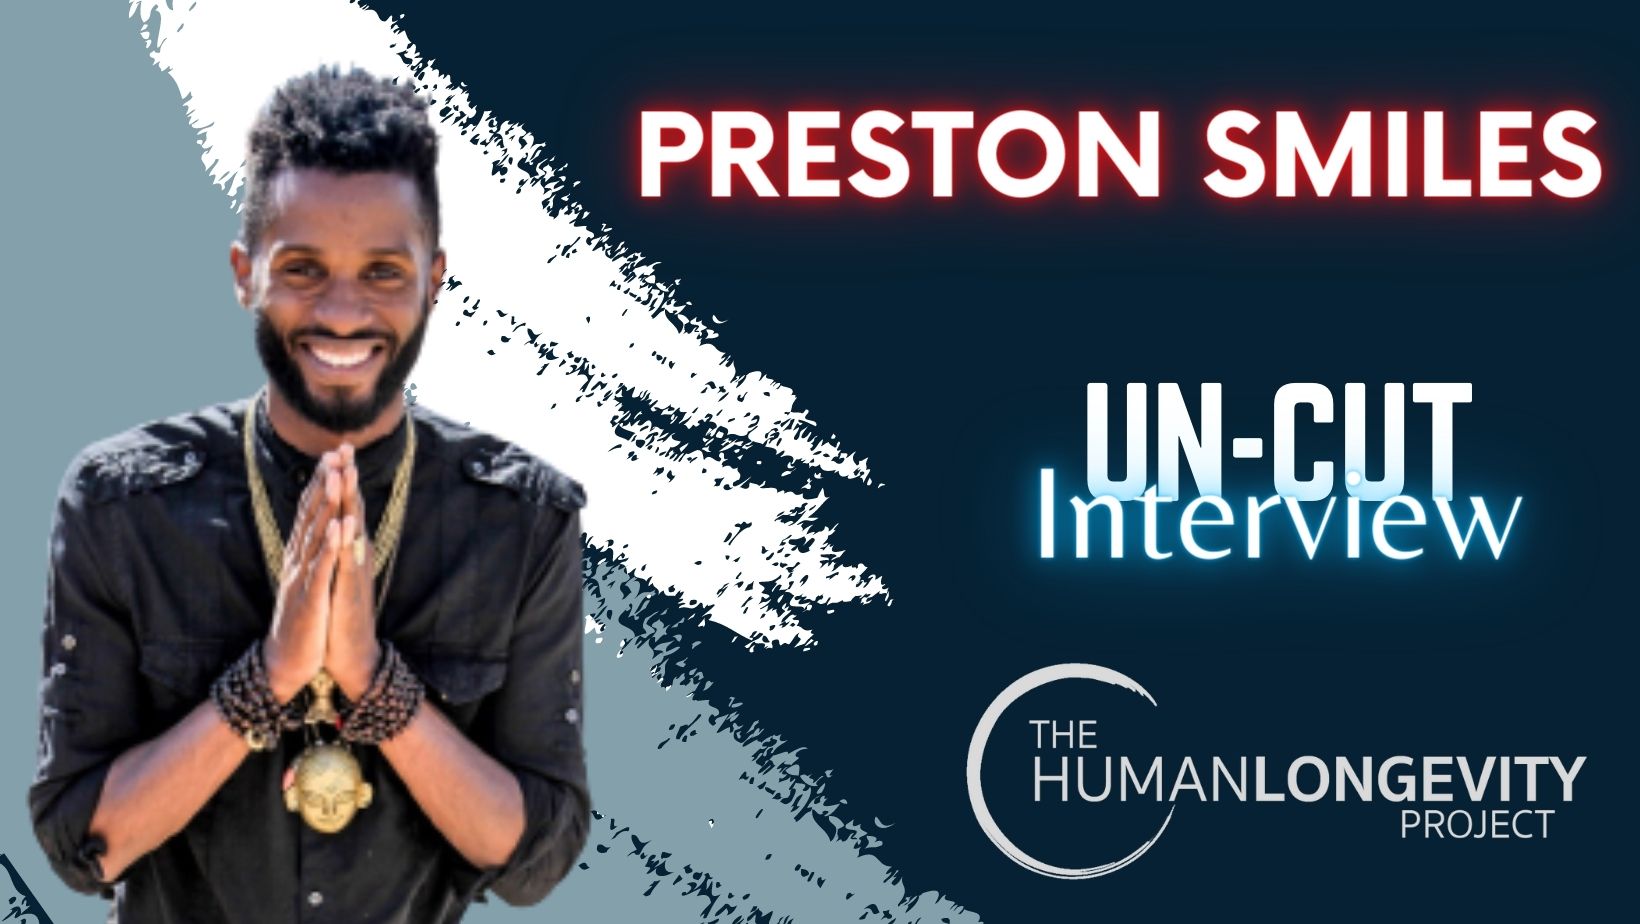 Human Longevity Project Uncut Interview With Preston Smiles